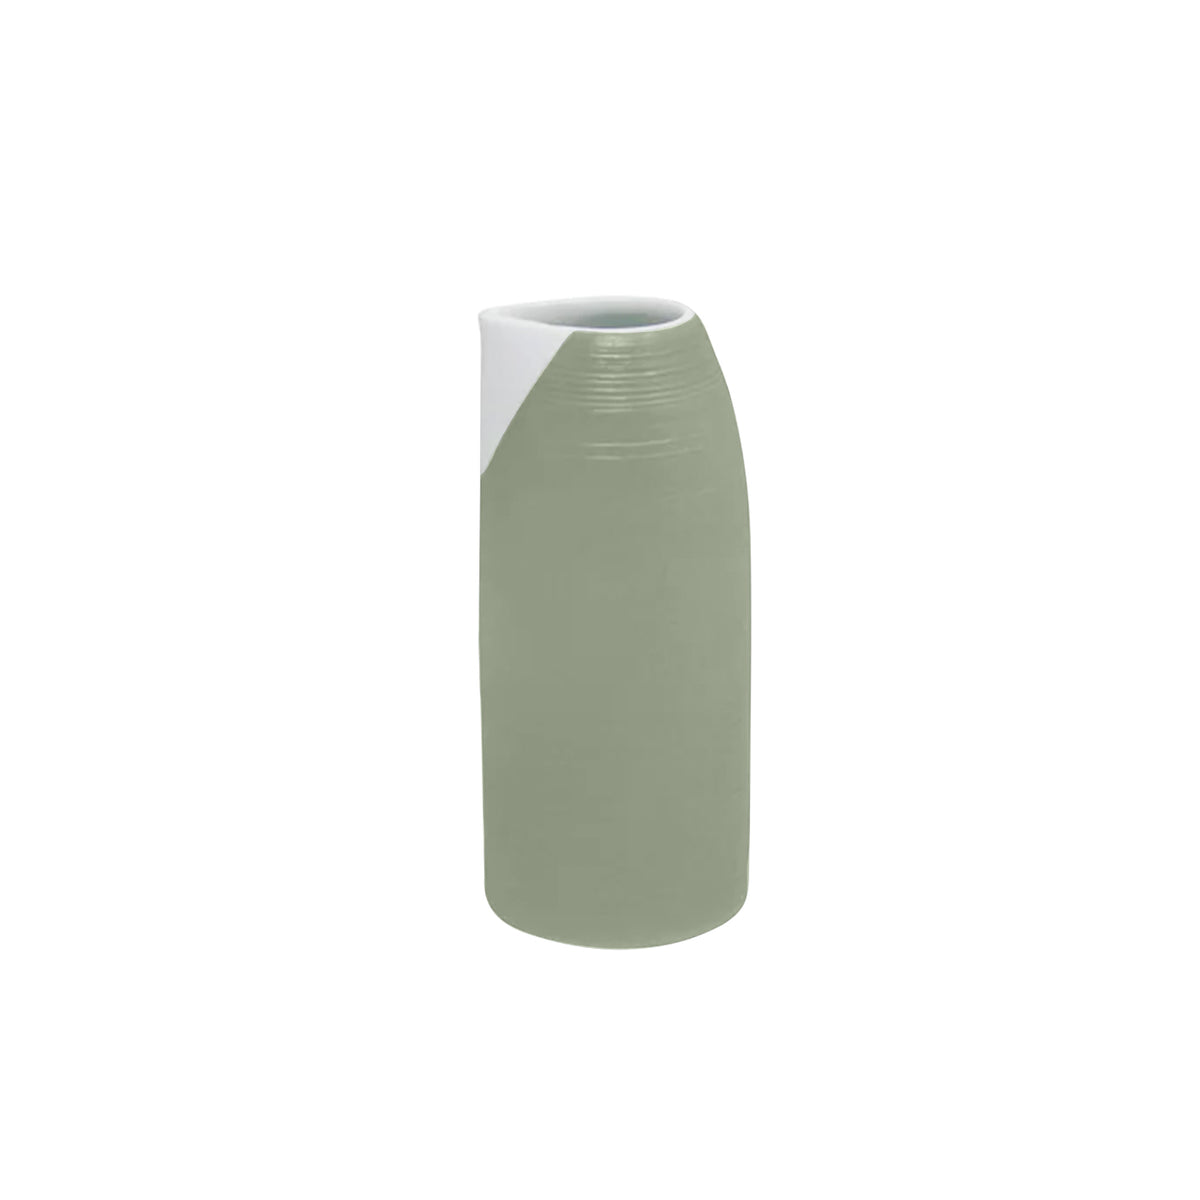 HEMISPHERE Khaki green - Sake jug, large